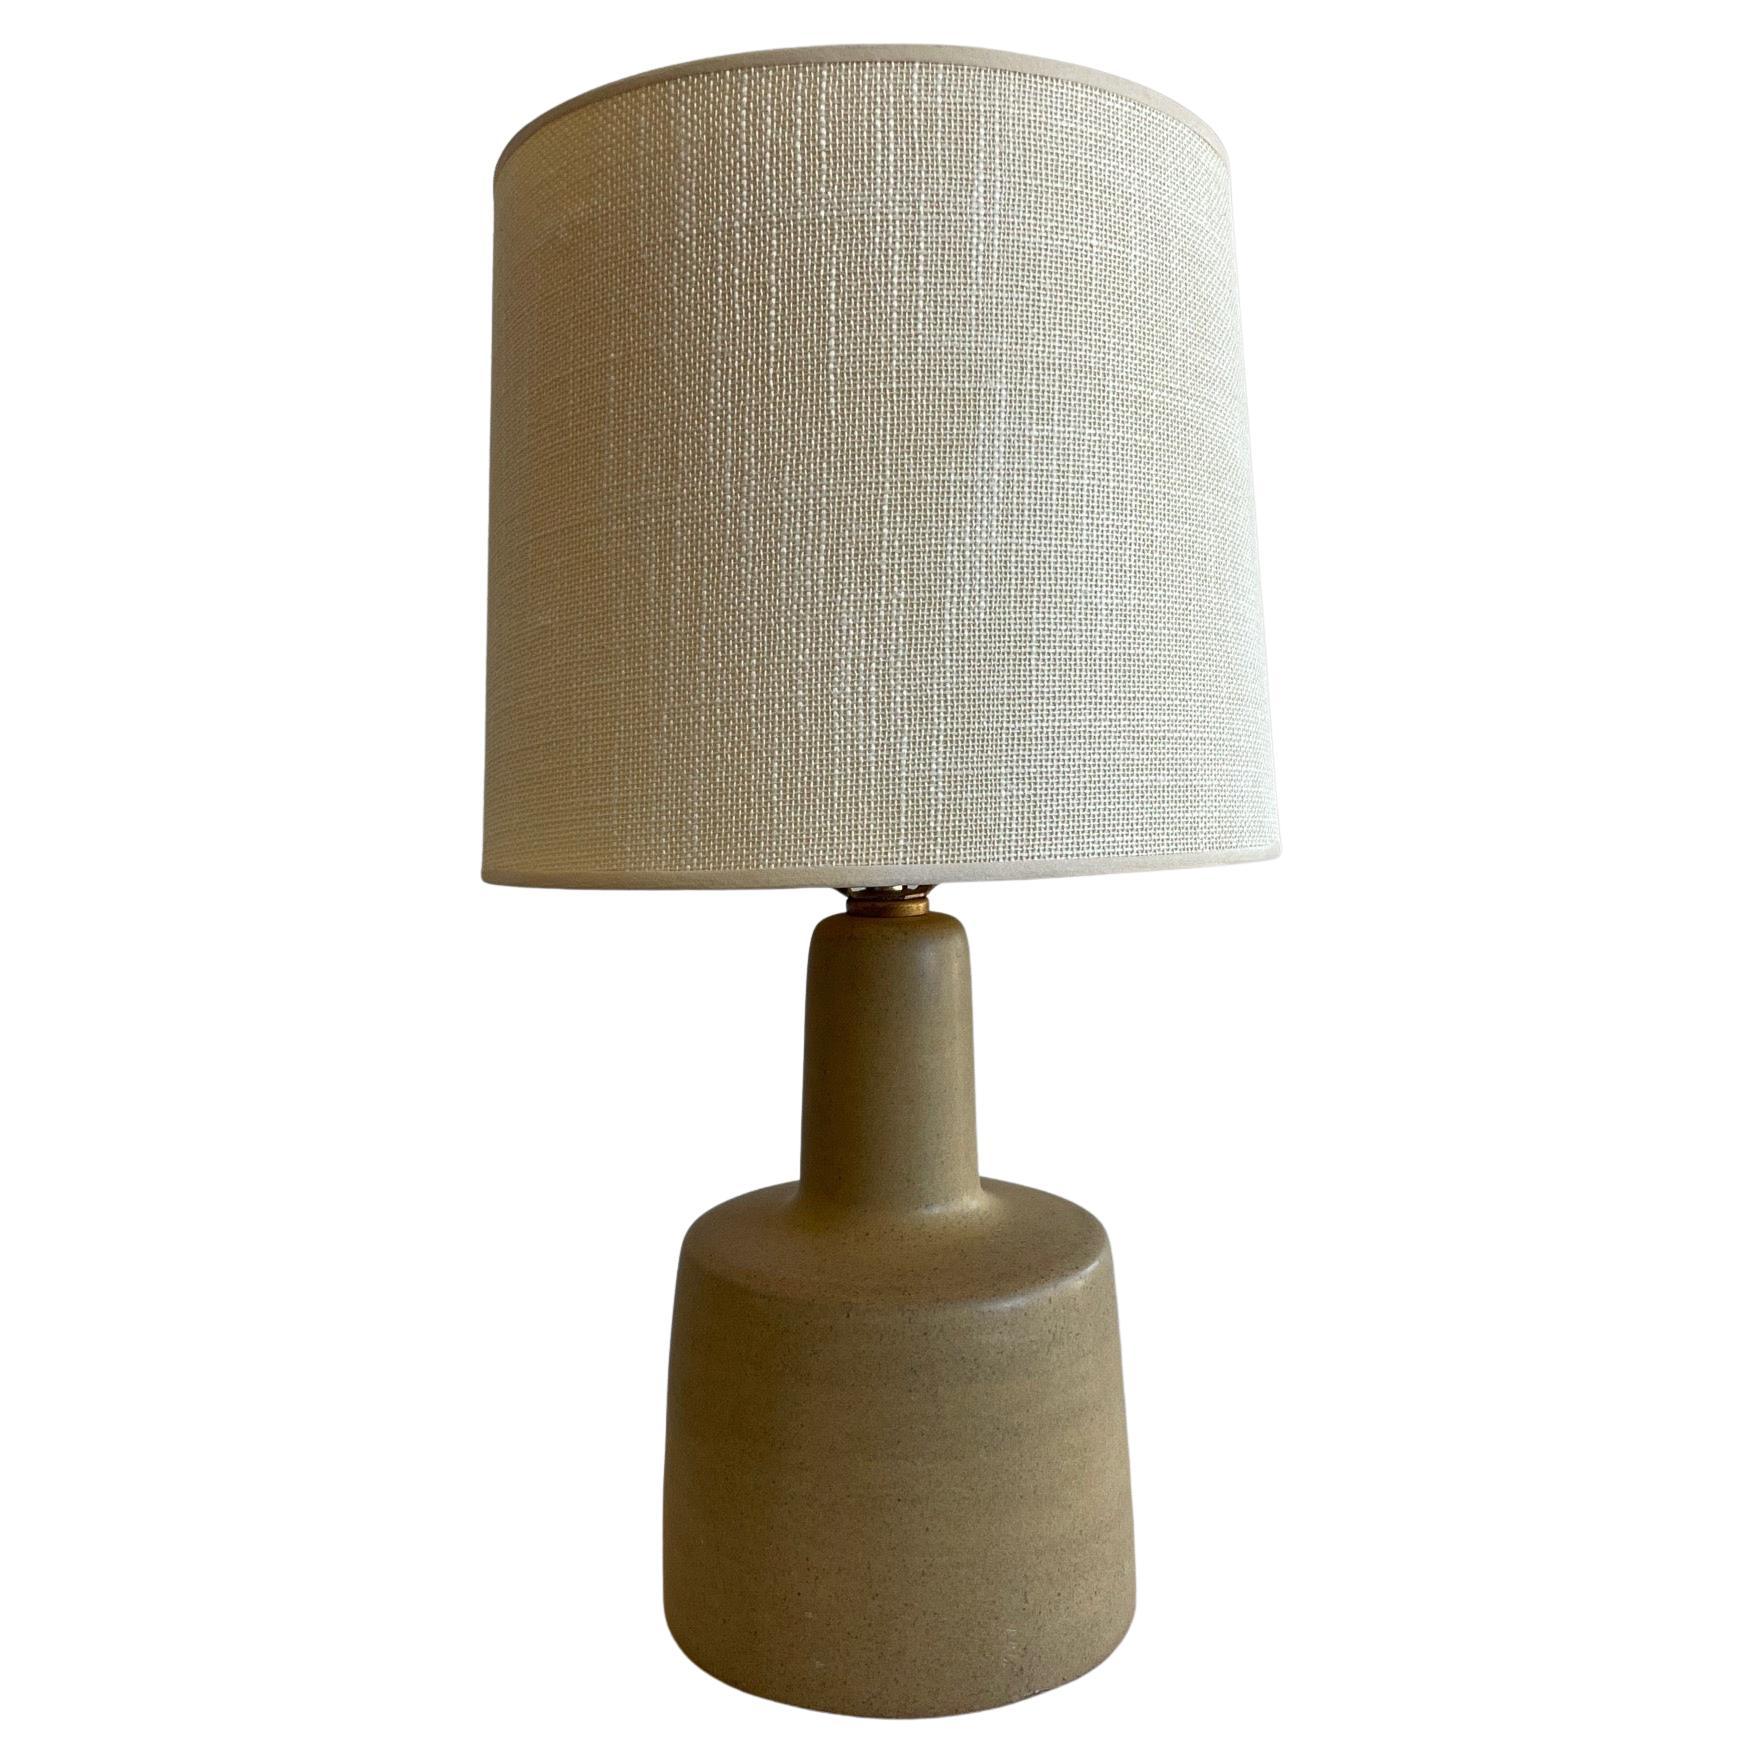  a Petite Ceramic Lamp by Gordon and Jane Martz